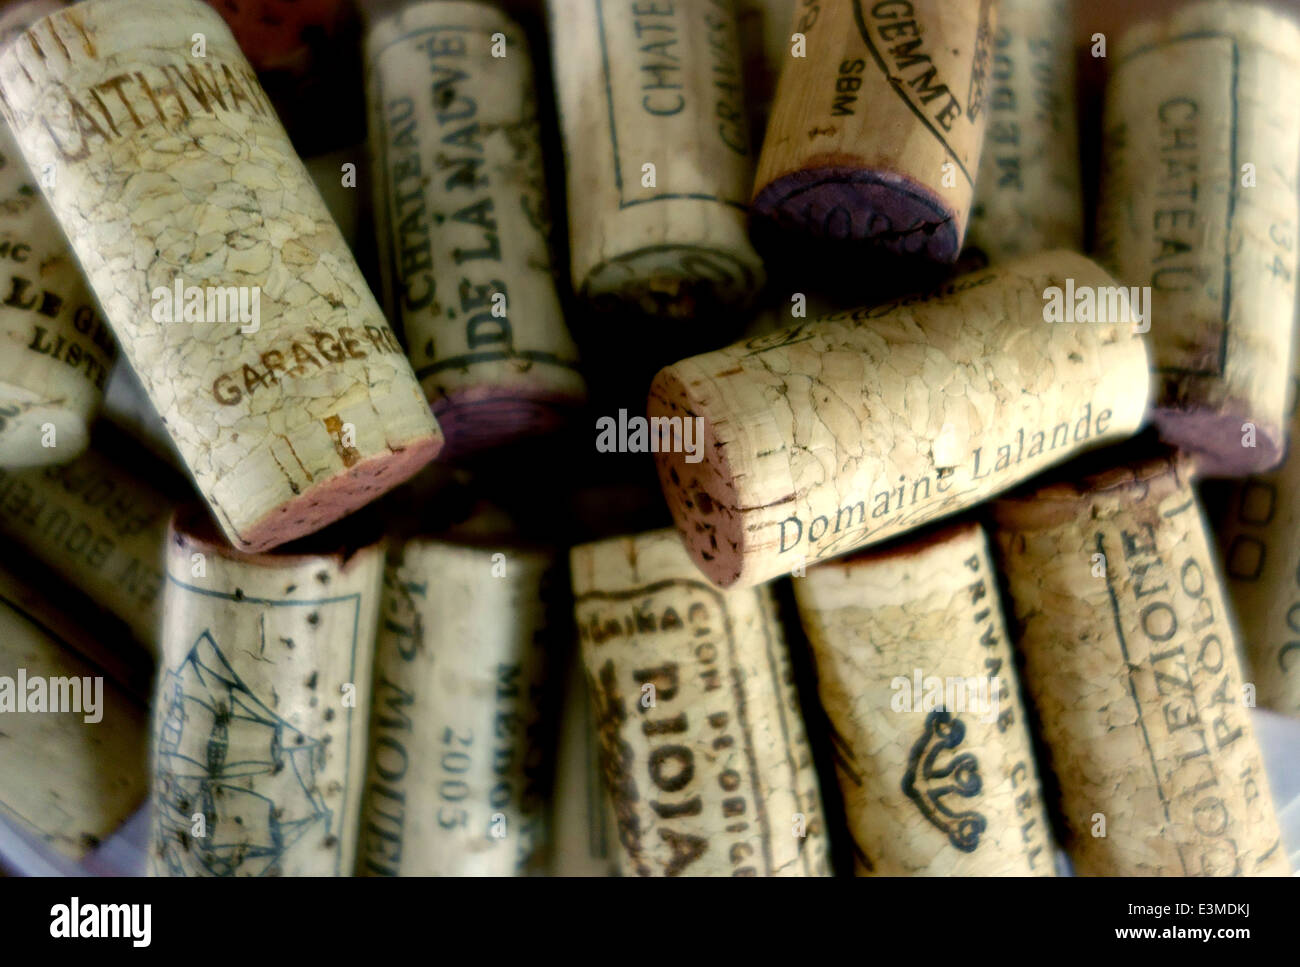 Wine bottle corks, London Stock Photo